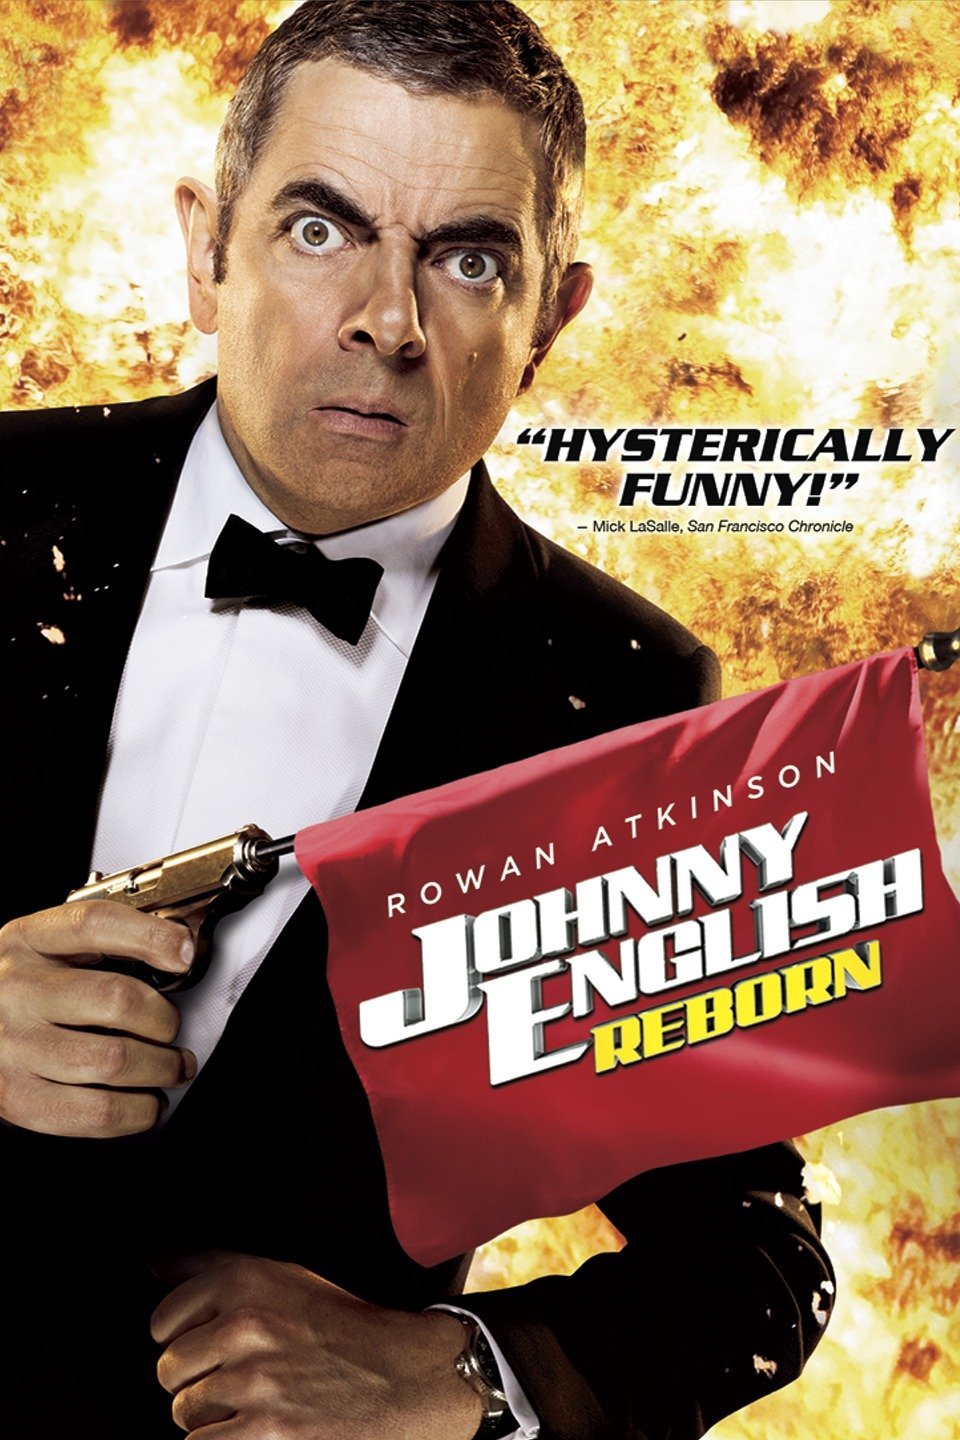 [MINI-HD] Johnny English Reborn (2011) พยัคฆ์ร้าย ศูนย์ ศูนย์ ก๊าก..สายลับกลับมาป่วน ภาค 2 [1080p] [พากย์ไทย 5.1 + อังกฤษ DTS] [บรรยายไทย + อังกฤษ] [เสียงไทย + ซับไทย] [OPENLOAD]